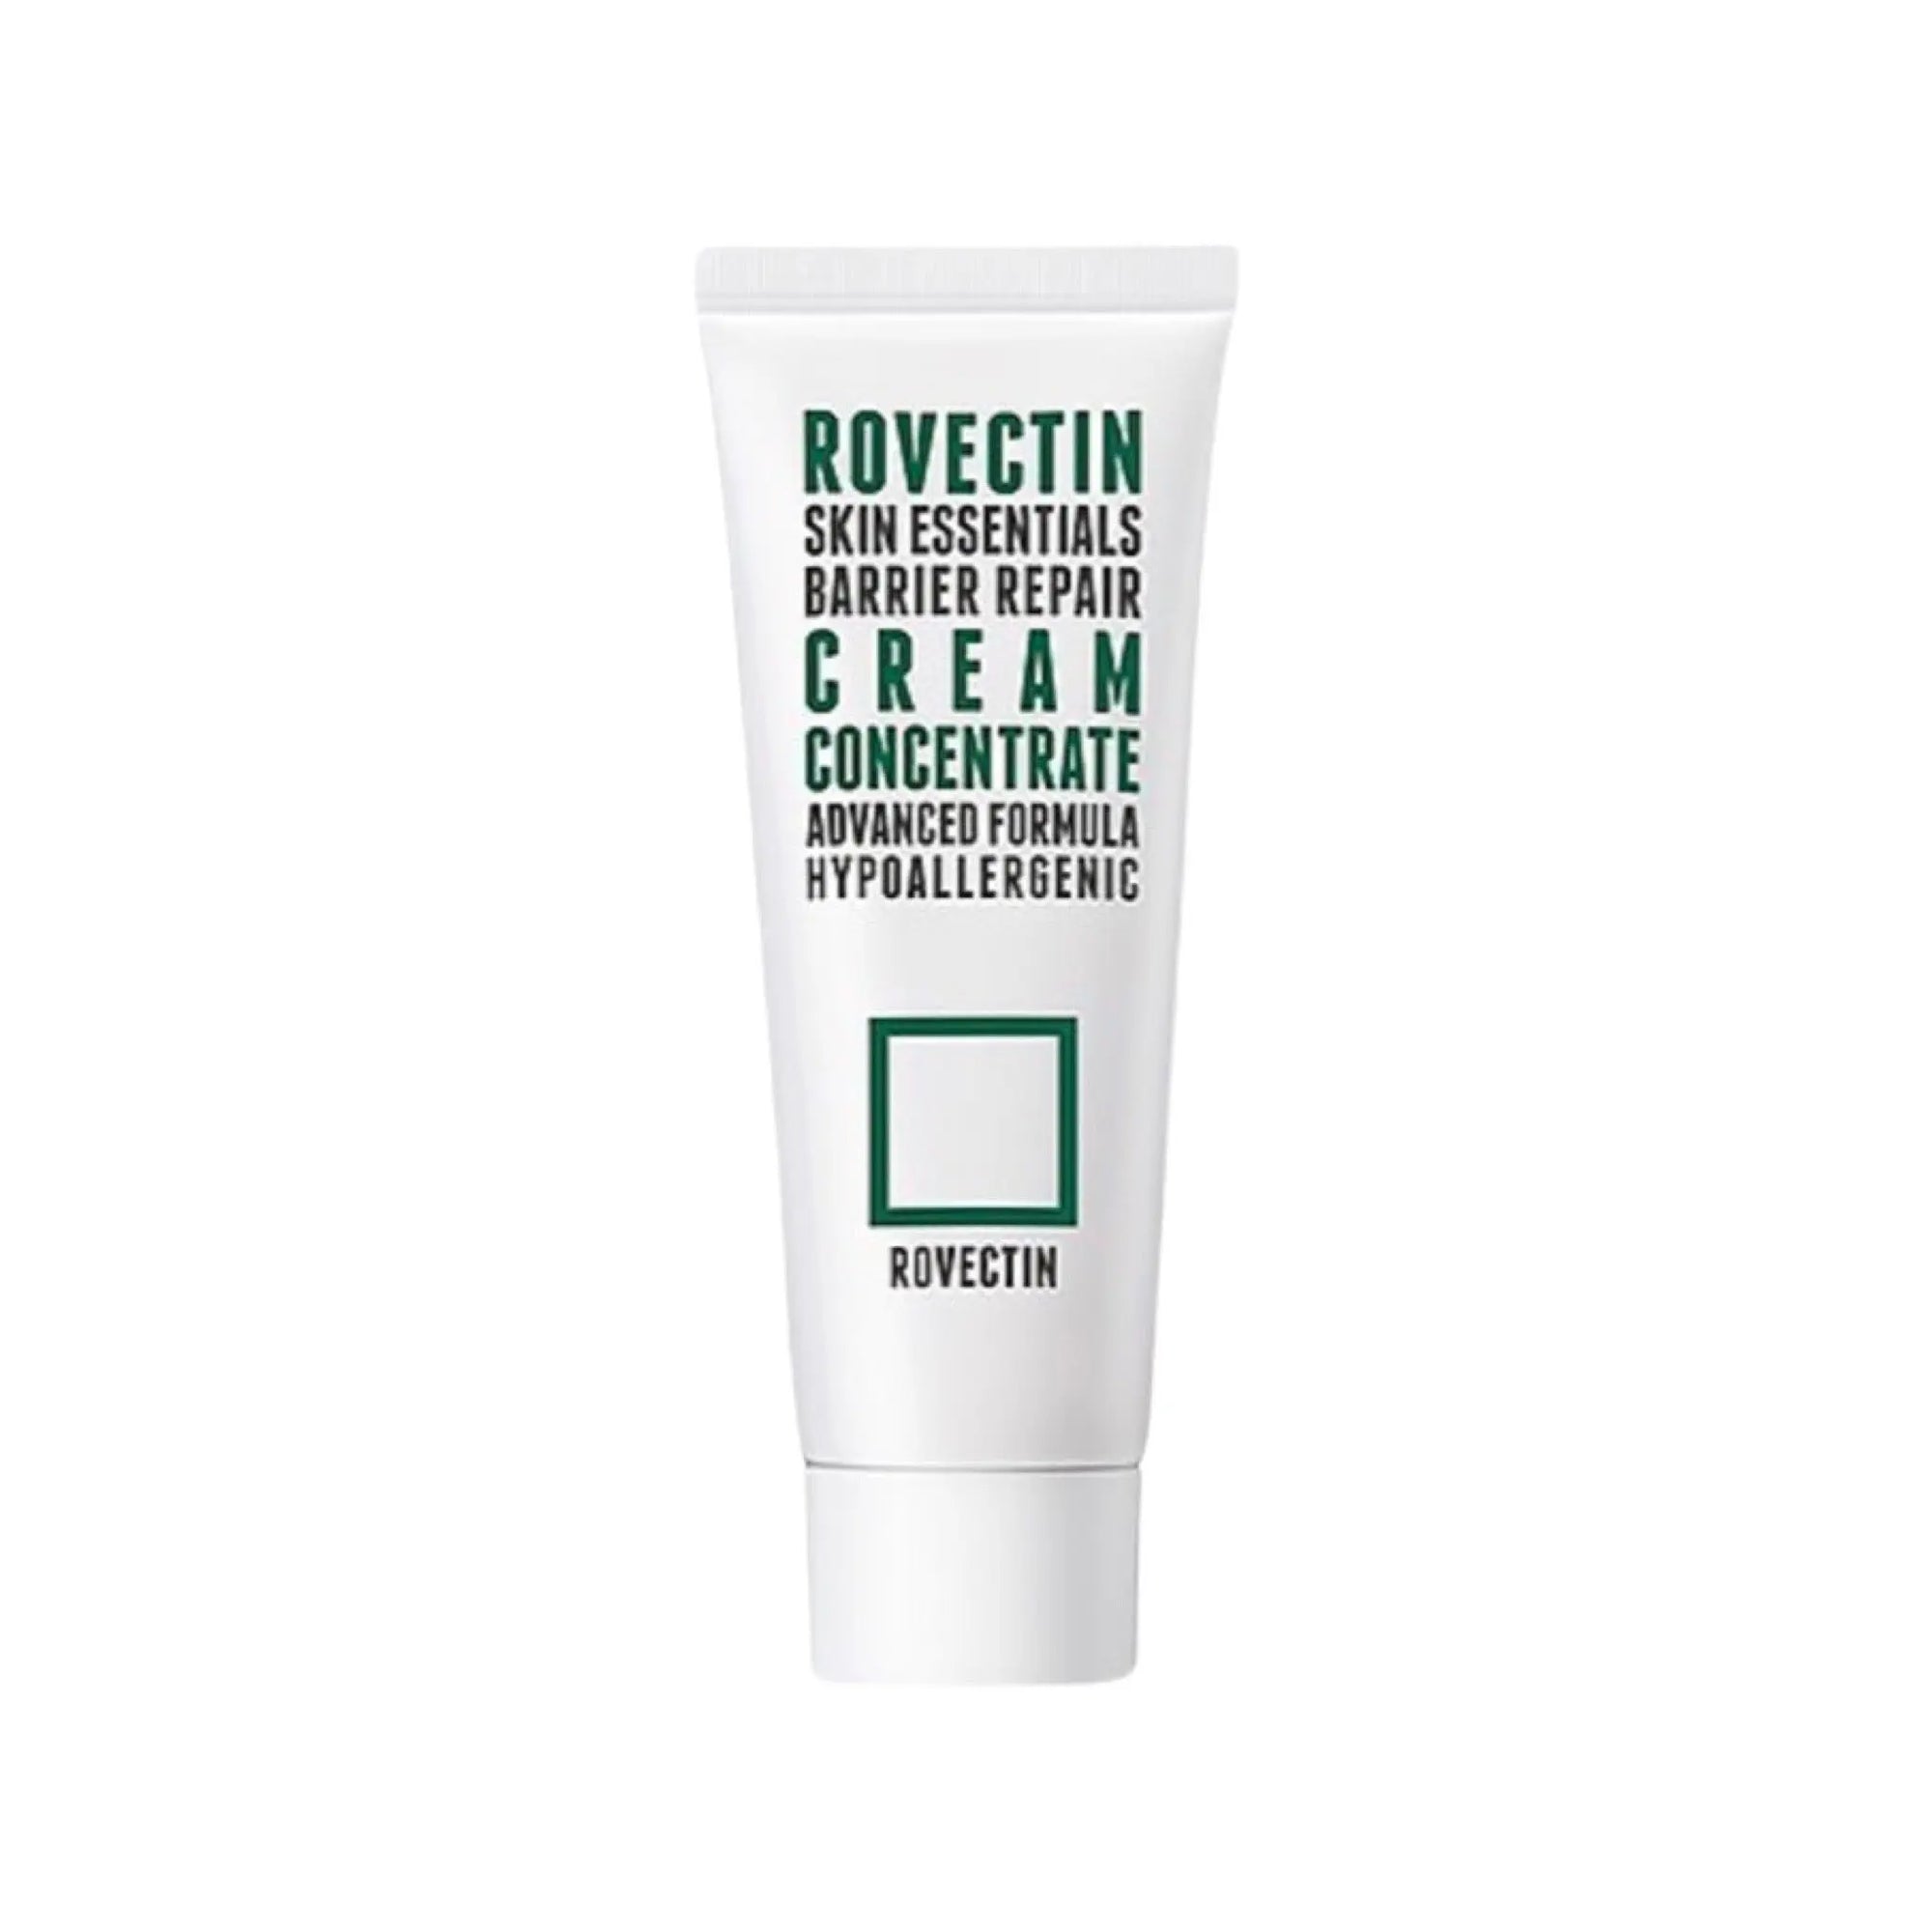 Rovectin - Skin Essentials Barrier Repair Cream Concentrate 60mL Rovectin